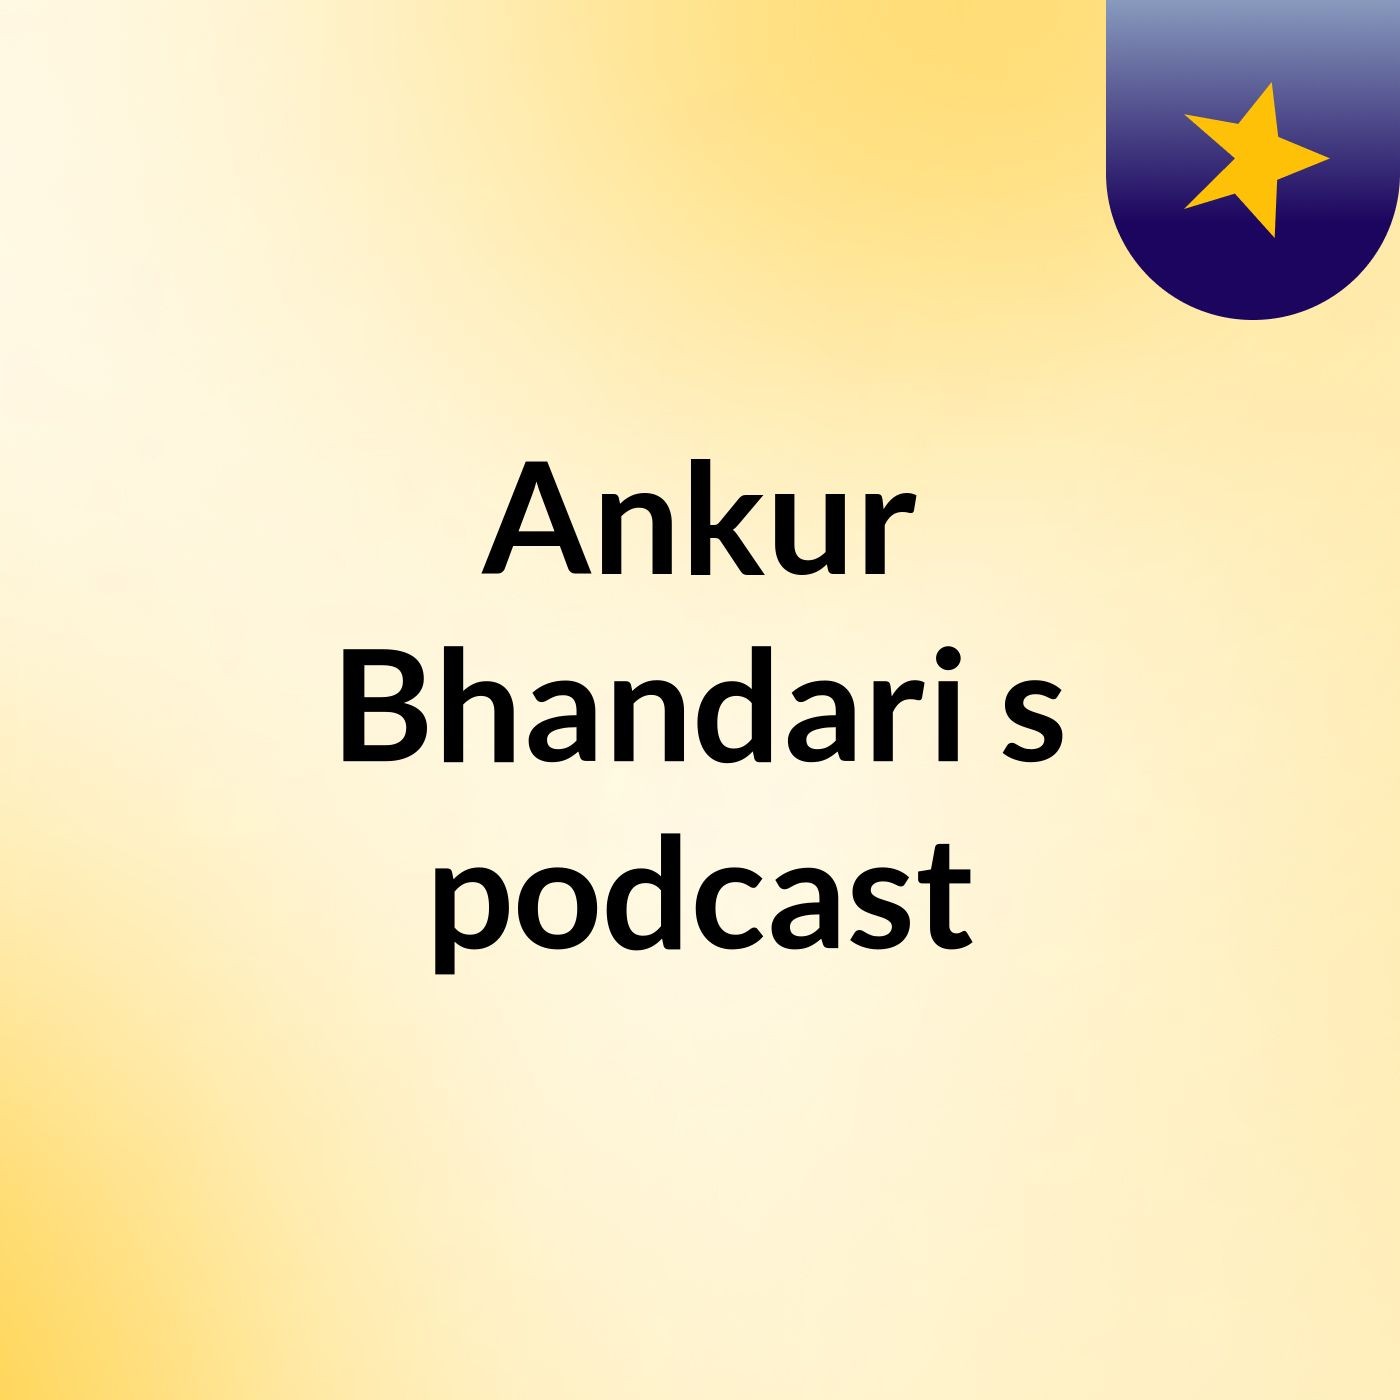 Episode 2 - Ankur Bhandari's podcast